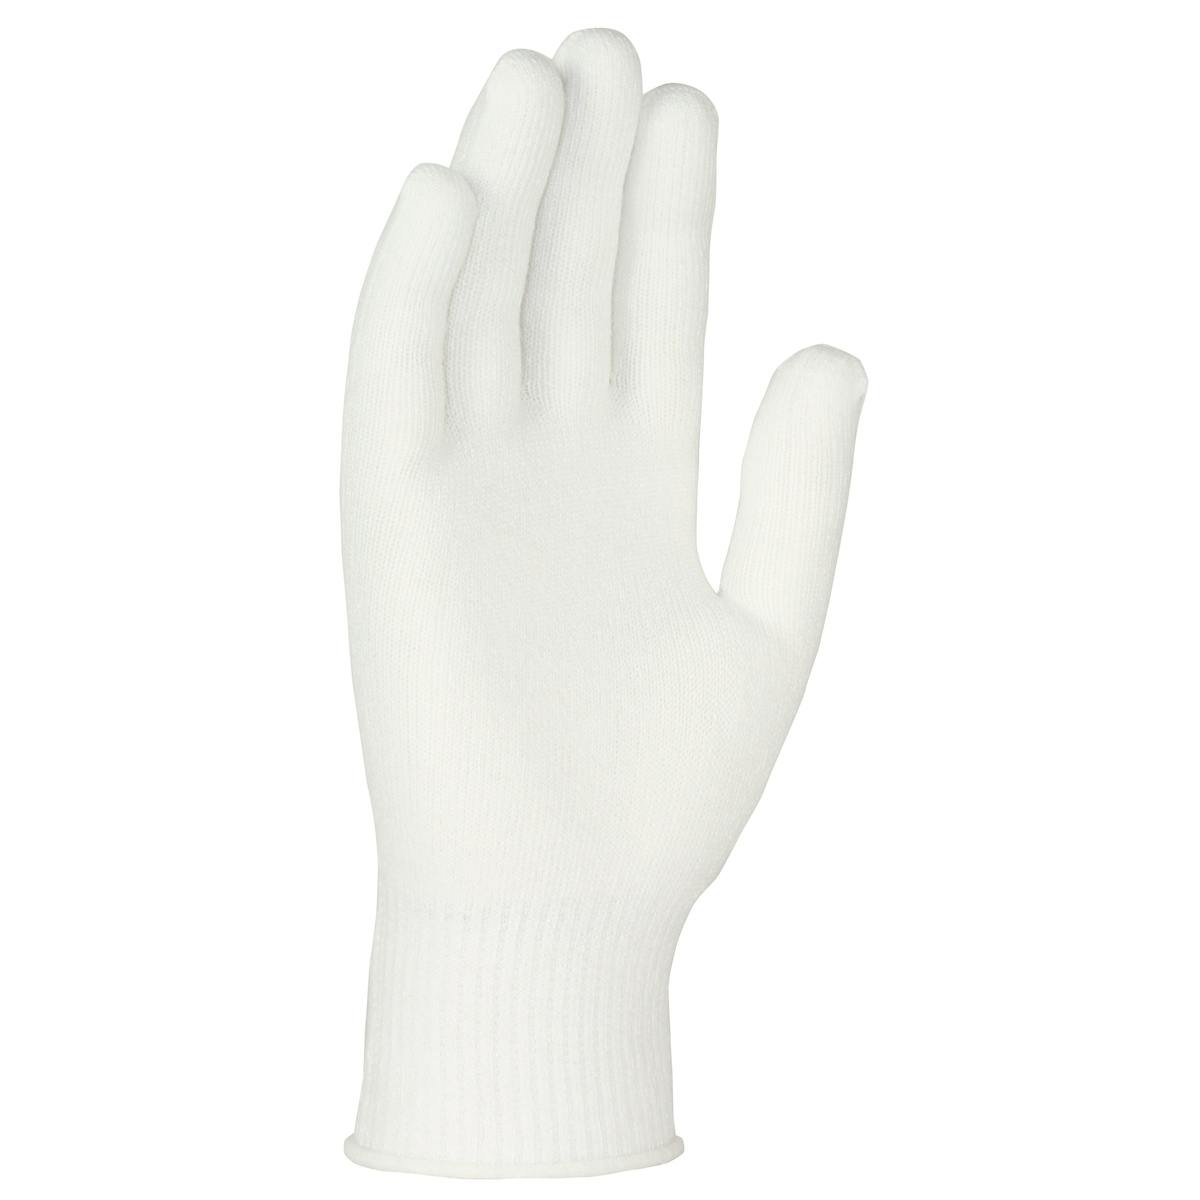 Seamless Knit Filament Polyester Glove - Light Weight, White (M13TM-X) - OS